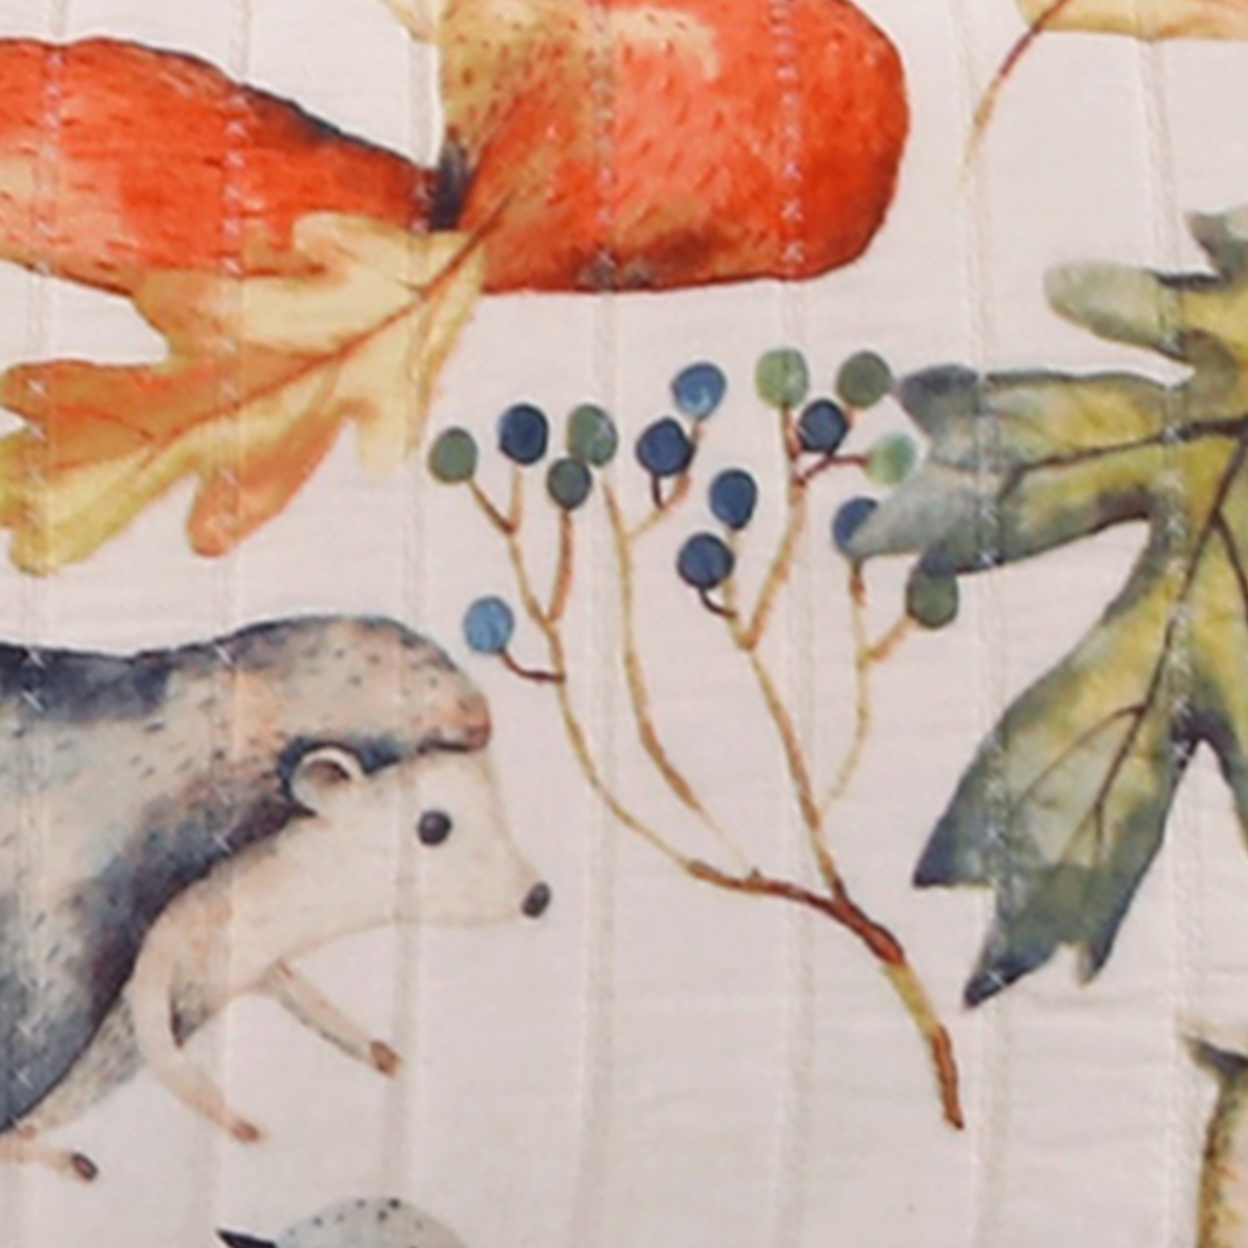 20 X 36 Polyester King Pillow Sham, Nature Inspired Print, Set Of 2, Multicolor- Saltoro Sherpi